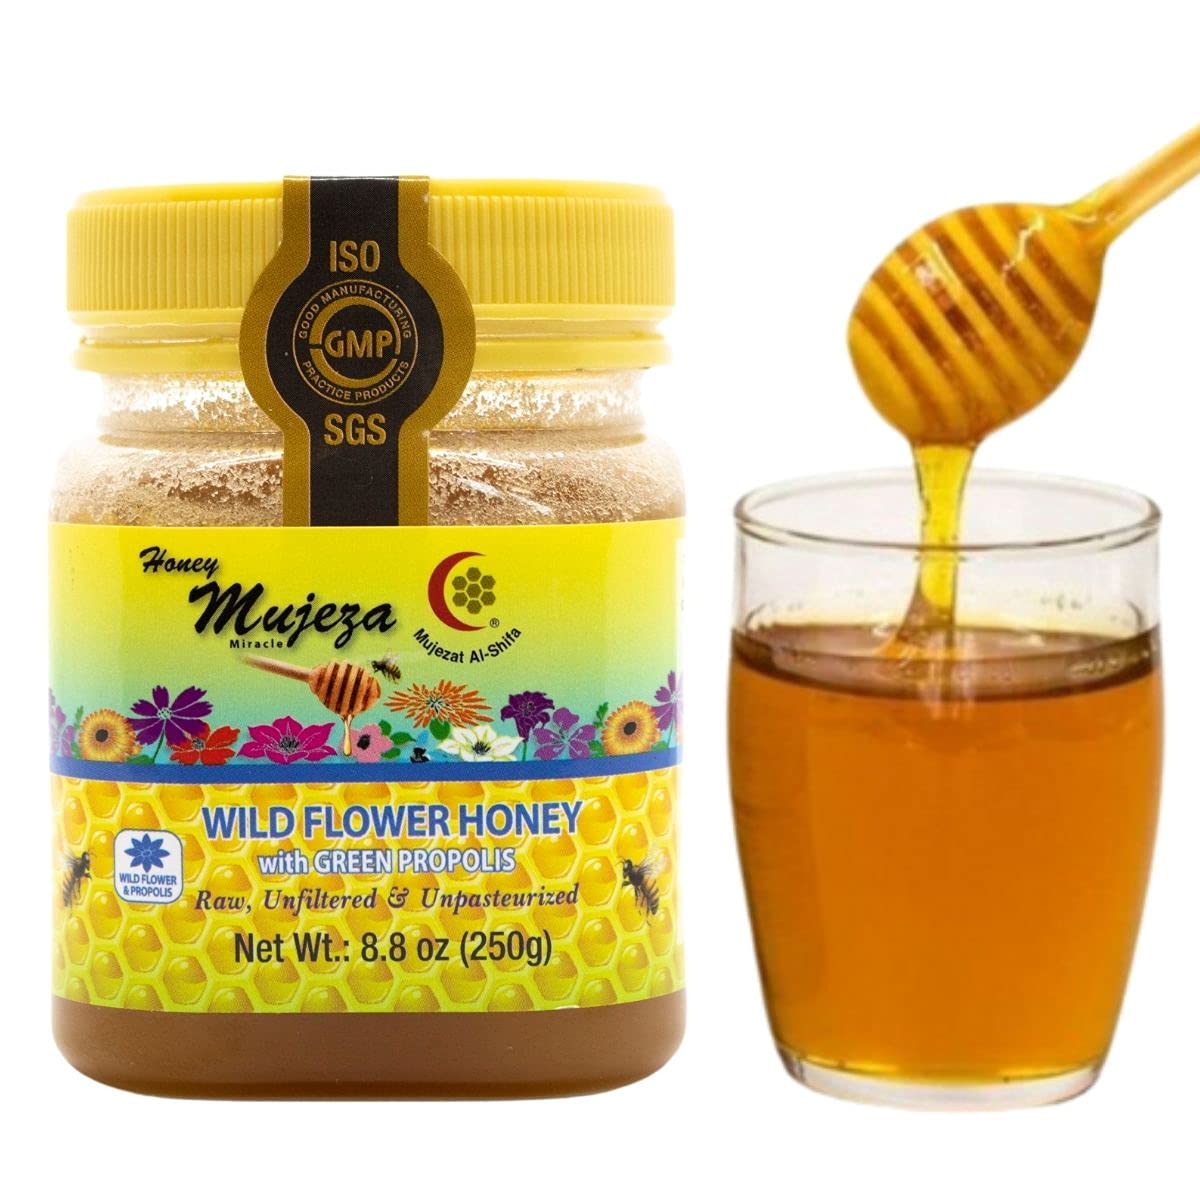 Mujeza Wildflower Honey, Unheated, Unfiltered, Unpasteurized 100% Natural Raw Honey, Non GMO (250g / 8.8oz) - Mujezat Al-Shifa